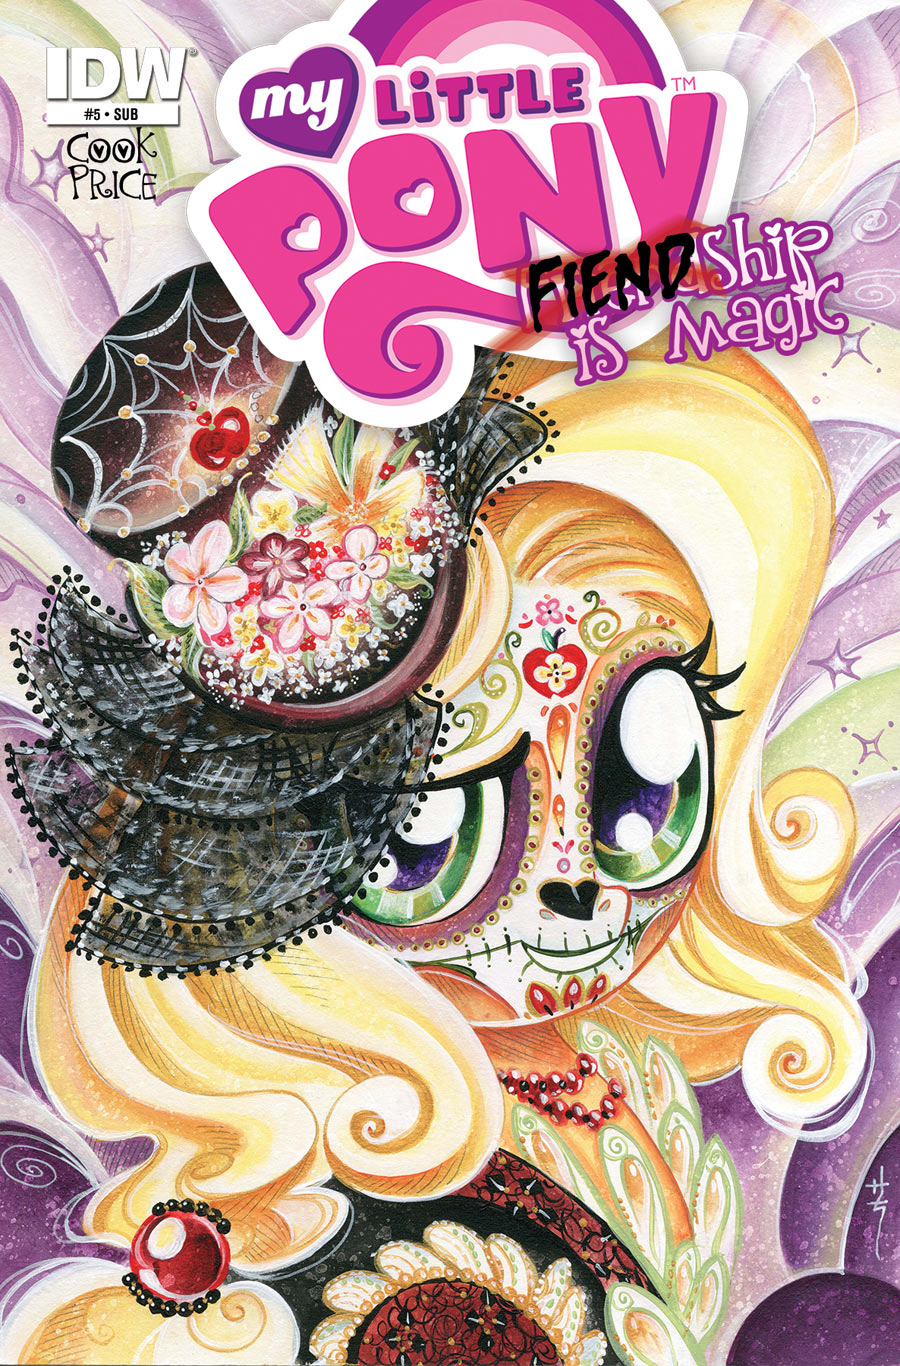 My Little Pony: FIENDship is Magic #5: Queen Chrysalis